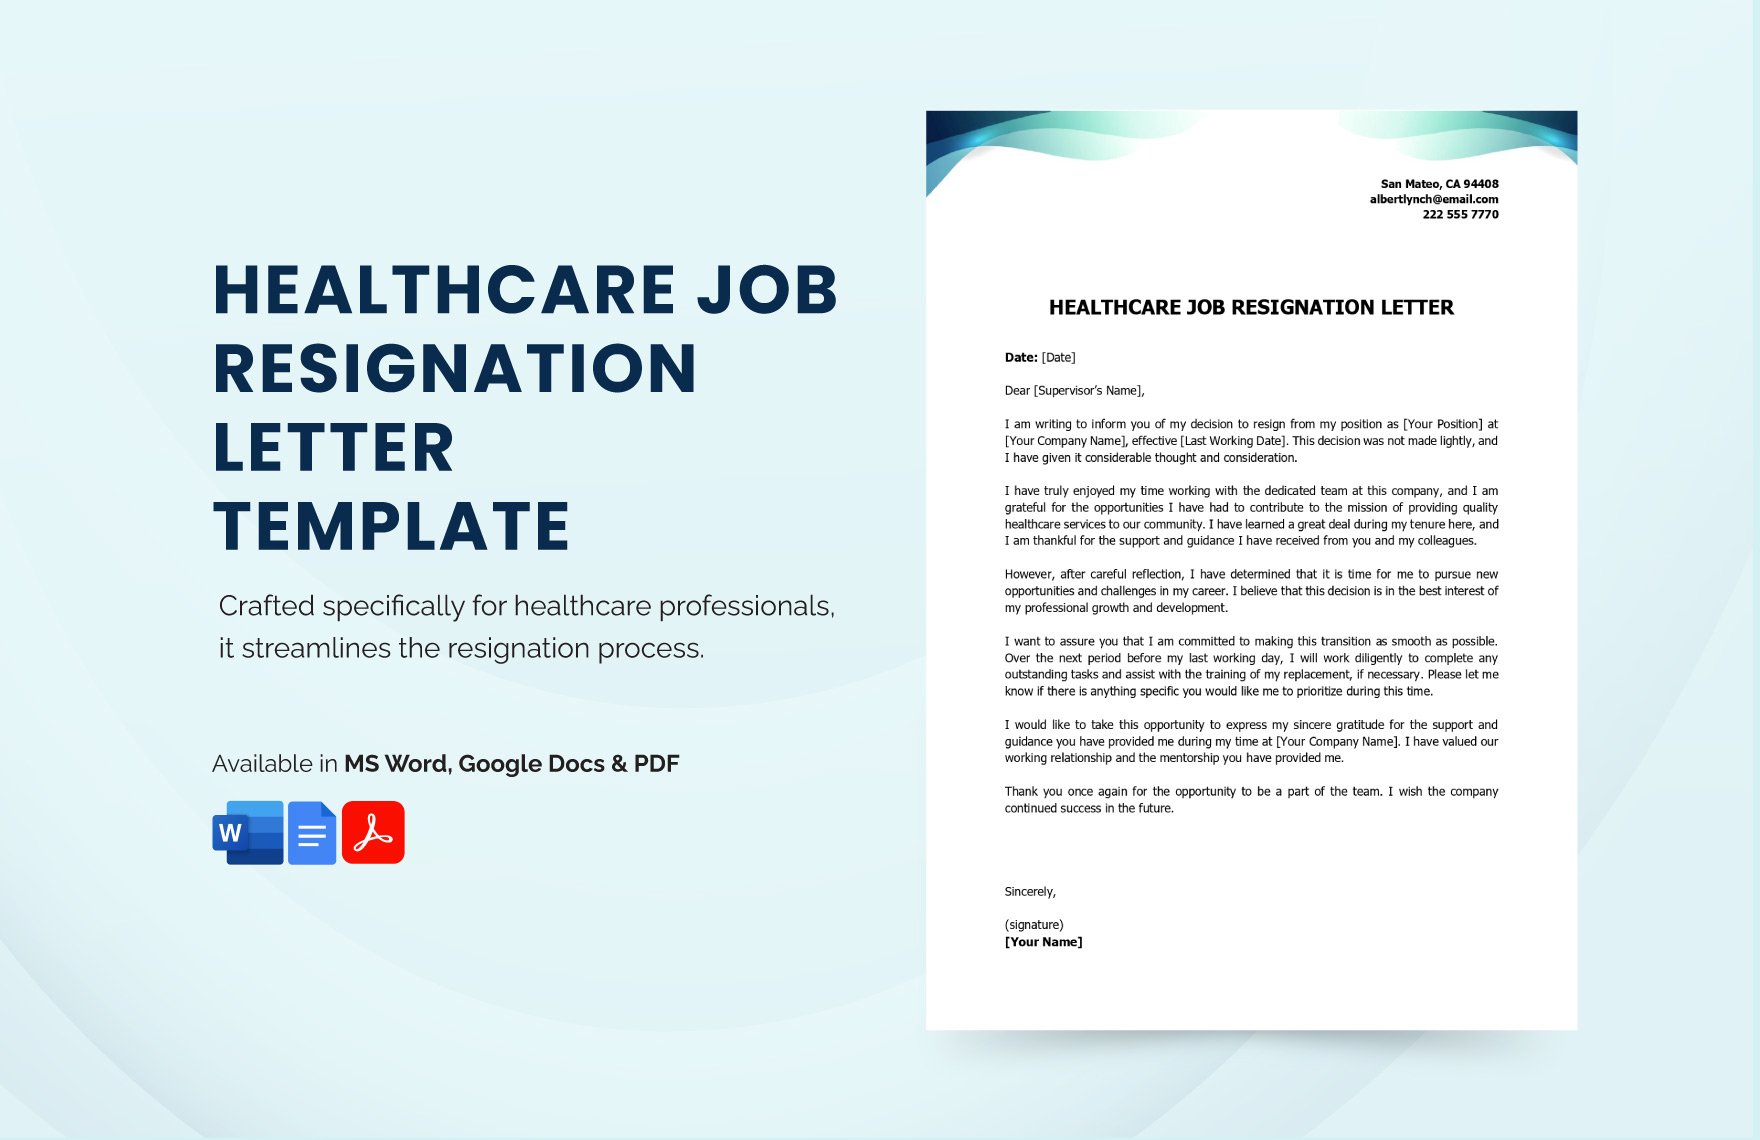 Healthcare Job Resignation Letter Template in Word, Google Docs, PDF